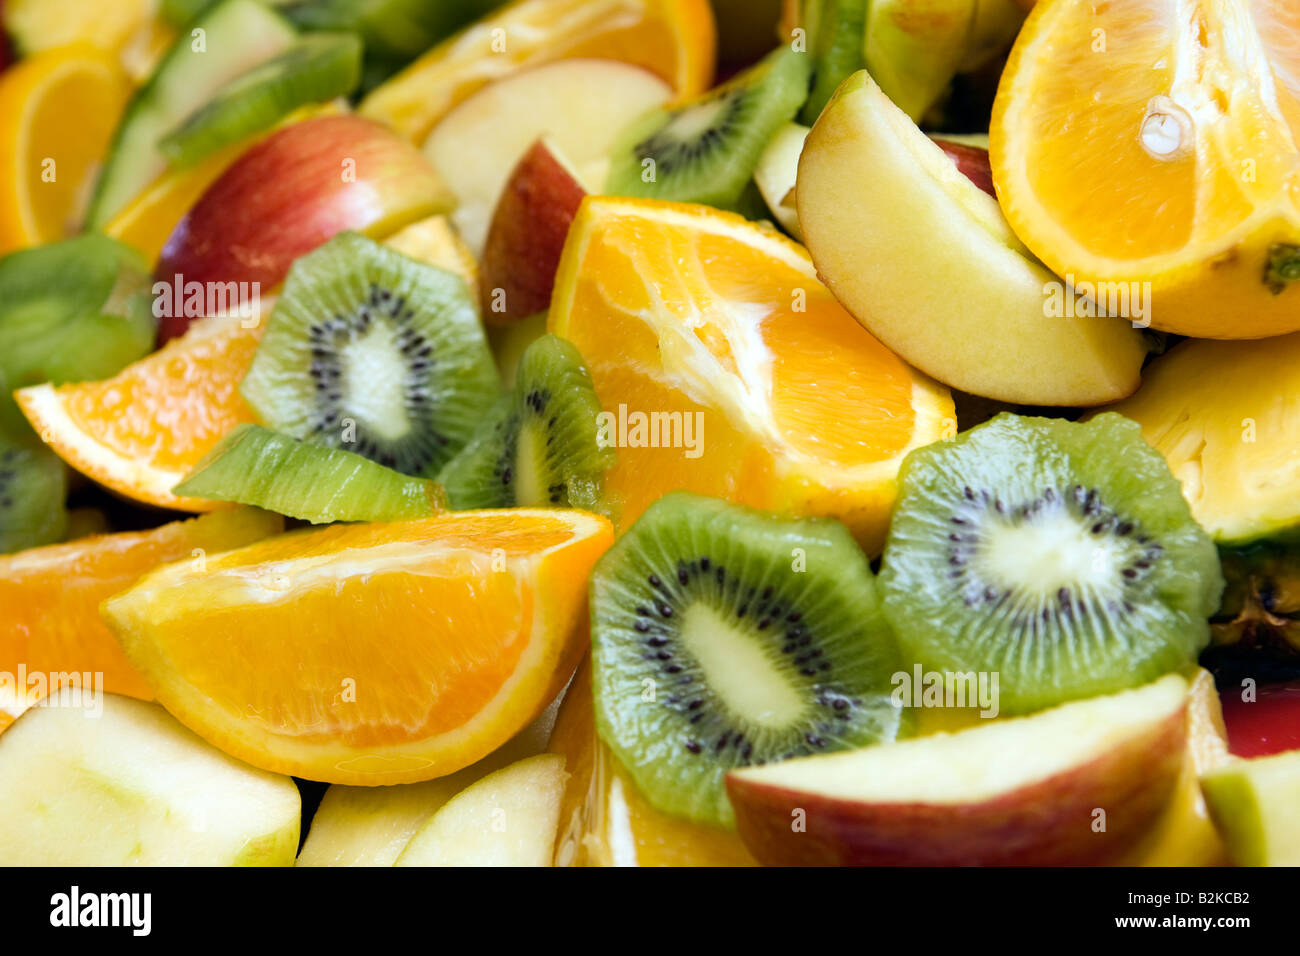 School Meals bowl of fresh fruit salad Stock Photo